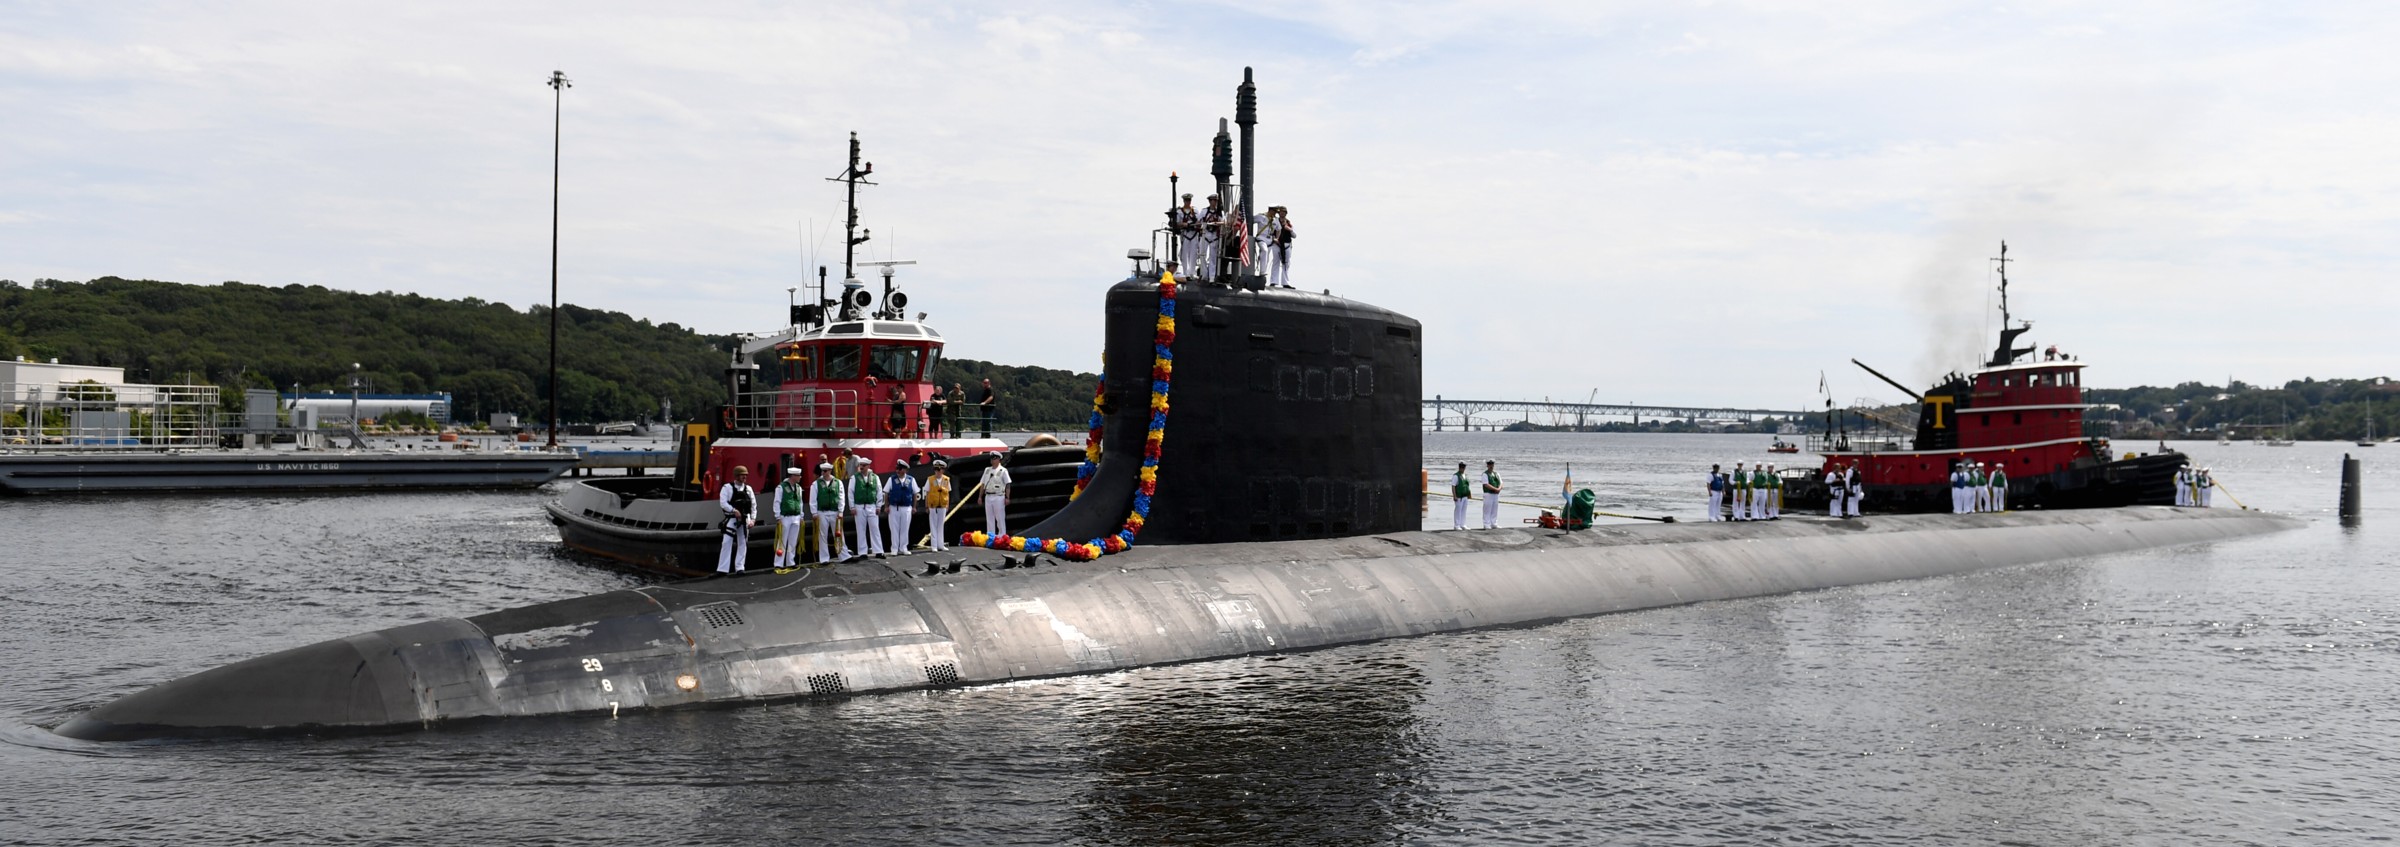 ssn-791 uss delaware virginia class attack submarine naval subase new london groton 30